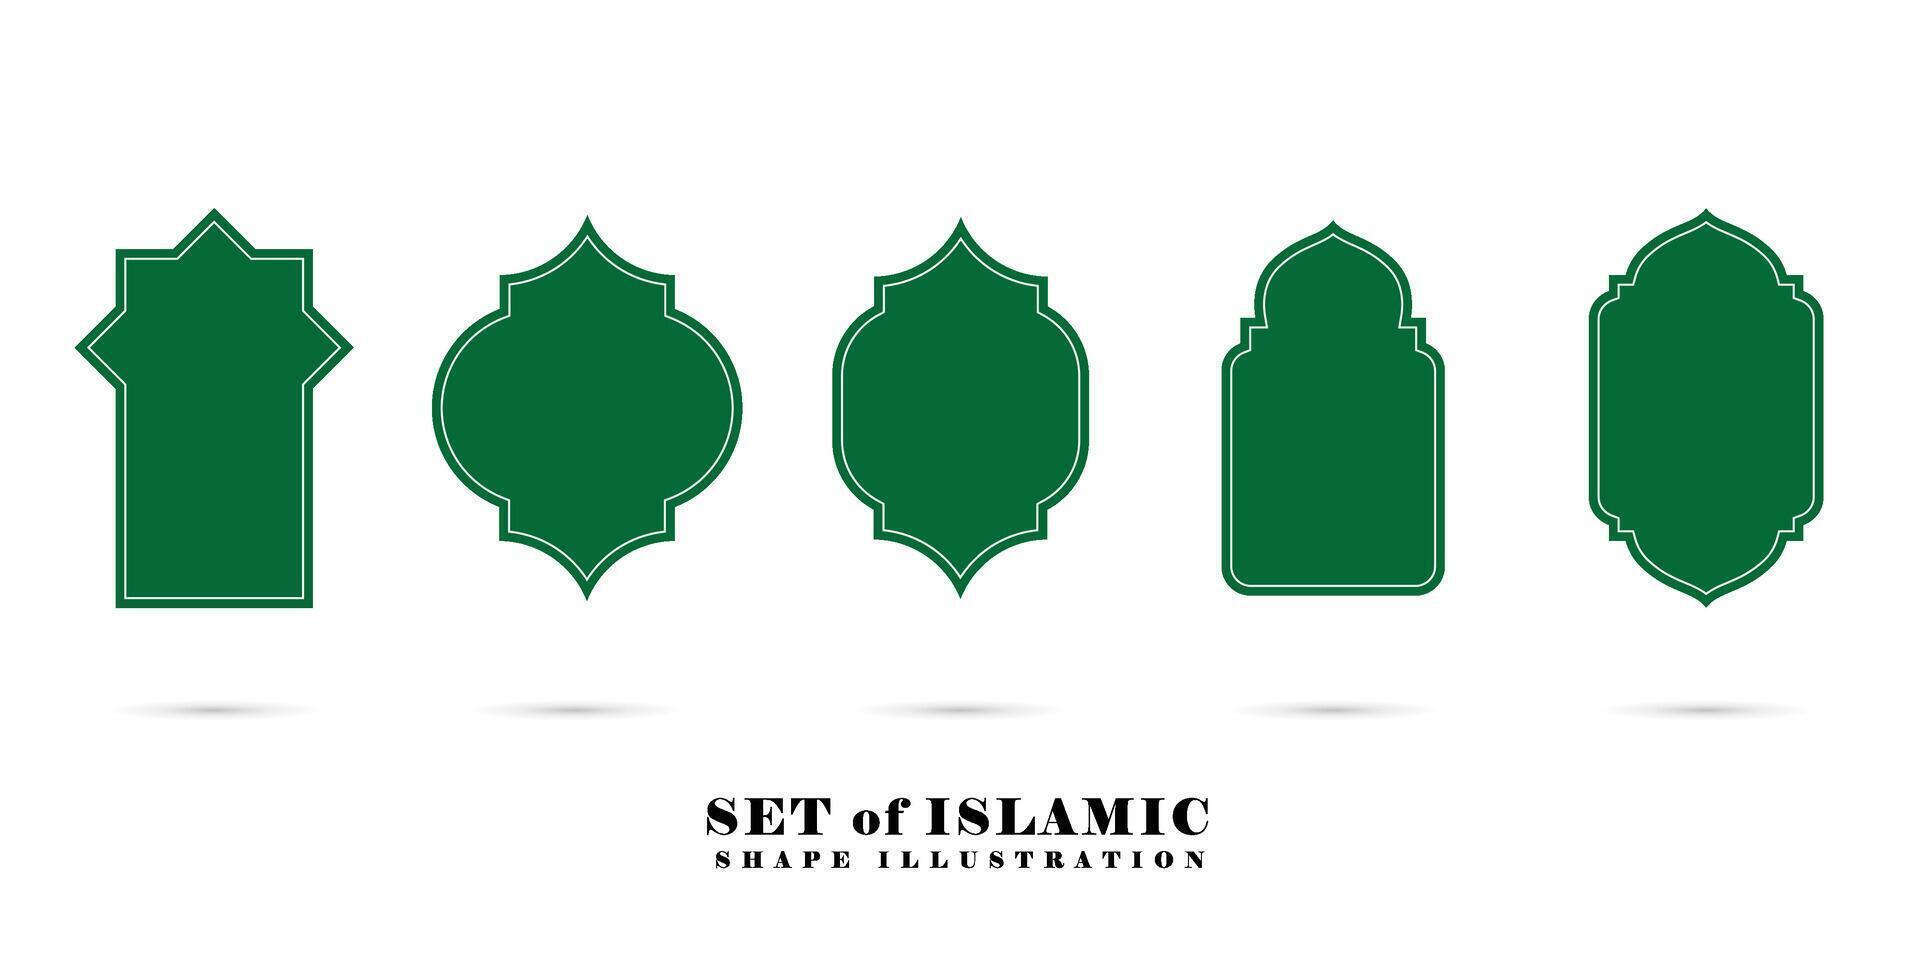 Set of Islamic Shape Illustration. Silhouette of Islamic Bagde. Good used for Islamic Design, Label, Sign, Sticker, etc. vector